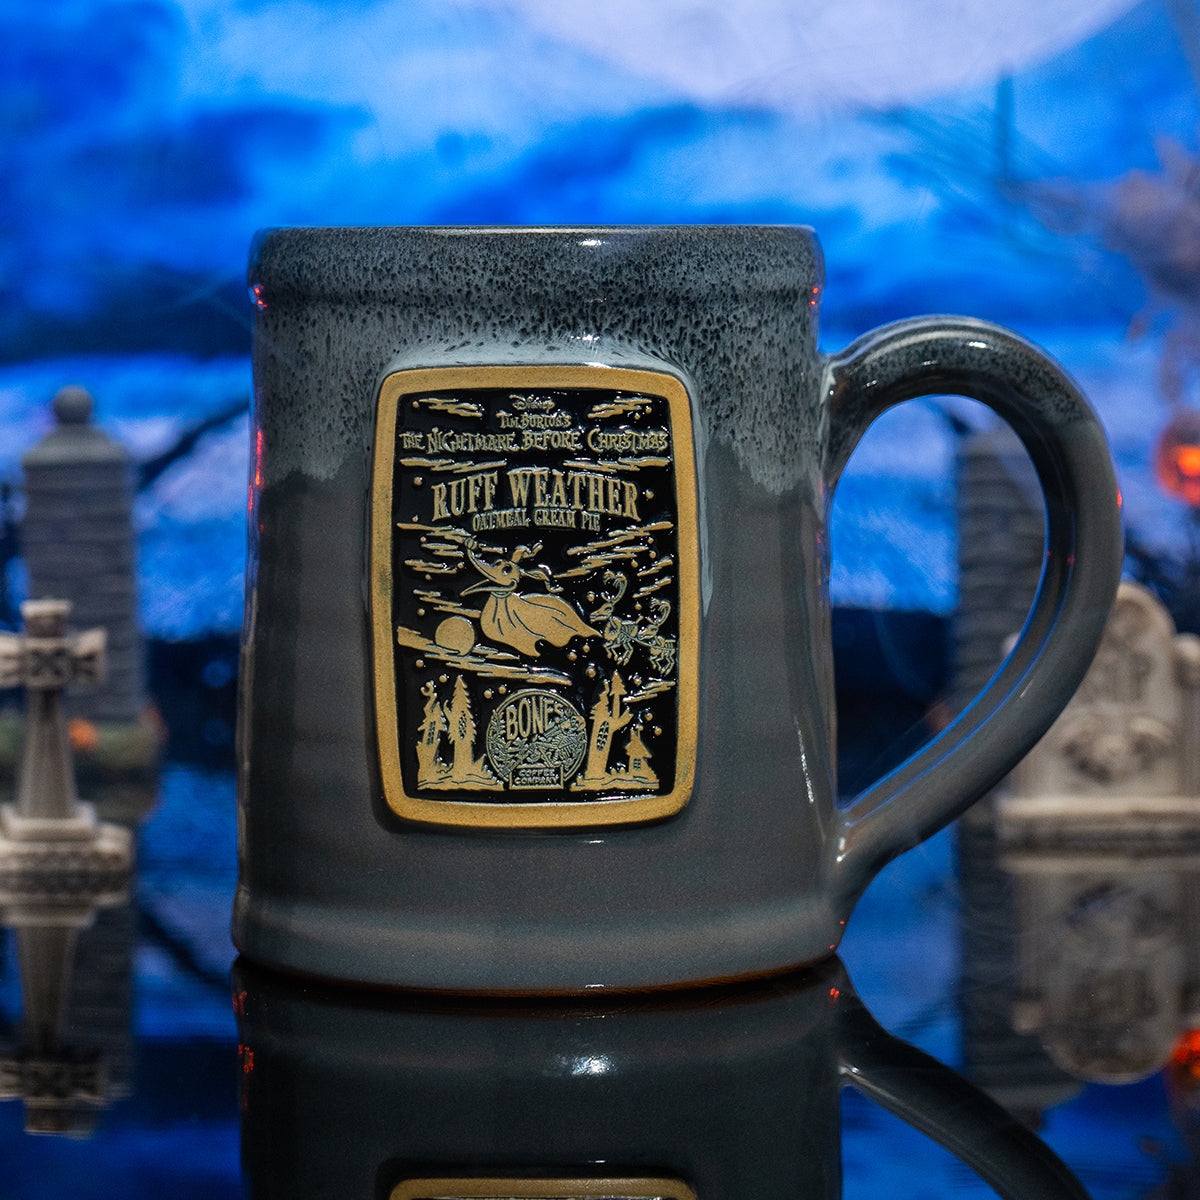 Disney Tim Burton's The Nightmare Before Christmas Collector's Box – Bones  Coffee Company